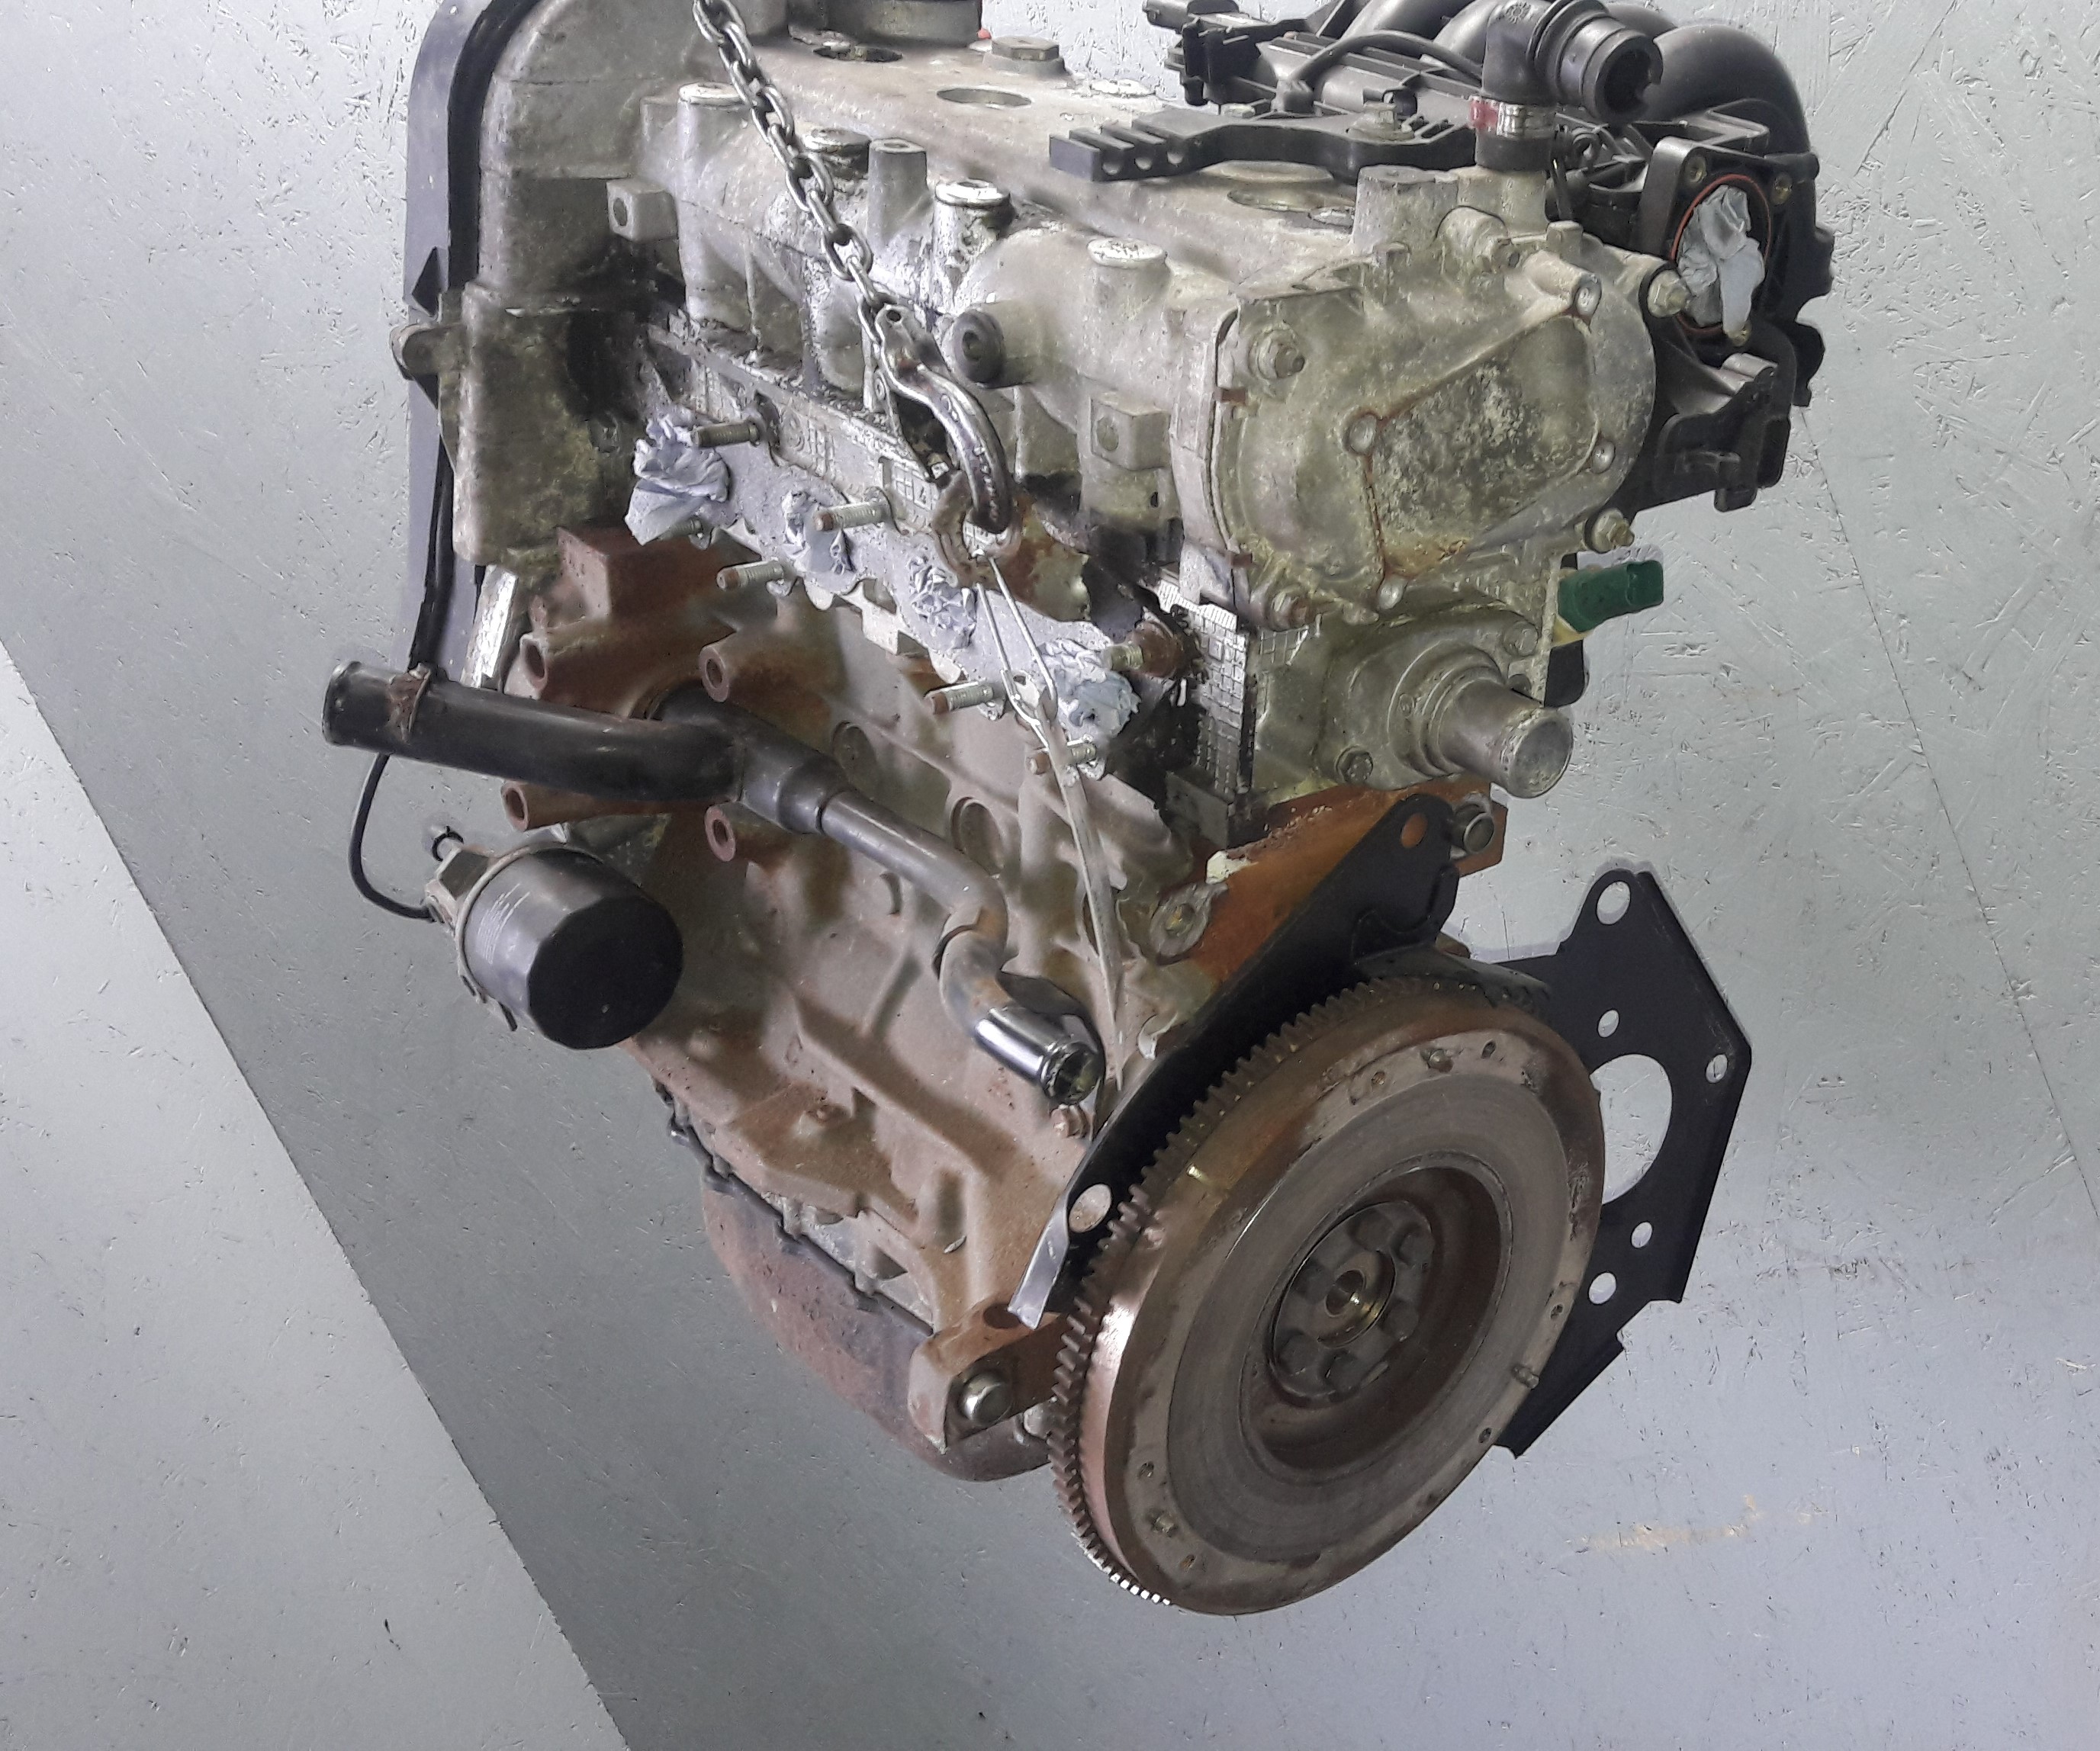 Fiat Punto 188 org Motor 1242ccm 59kW 188A5000 119Tkm geprüft Bj 2001